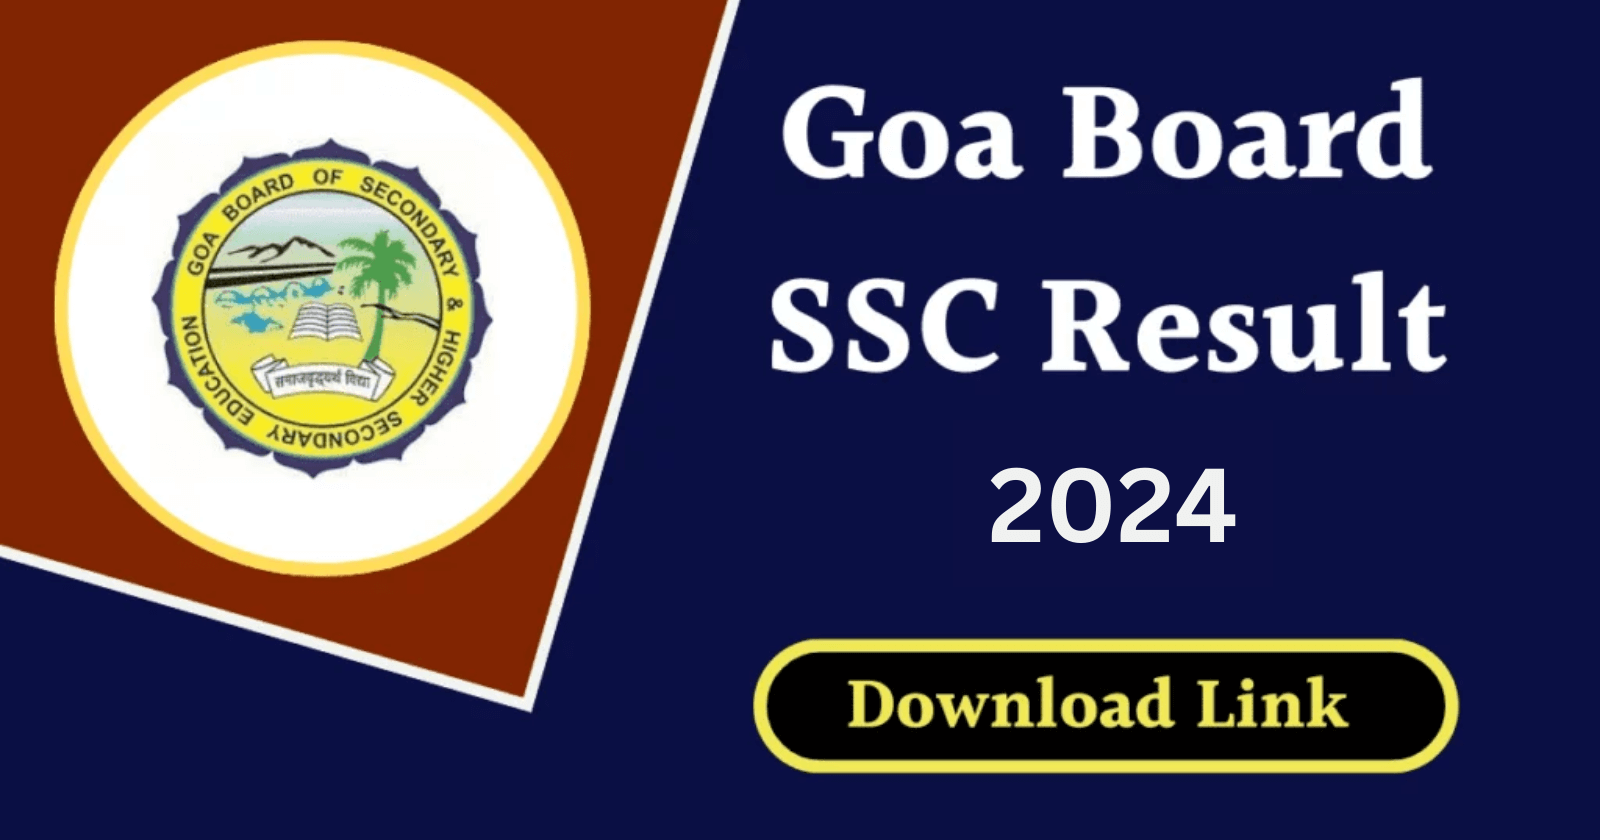 Goa Board SSC Result 2024